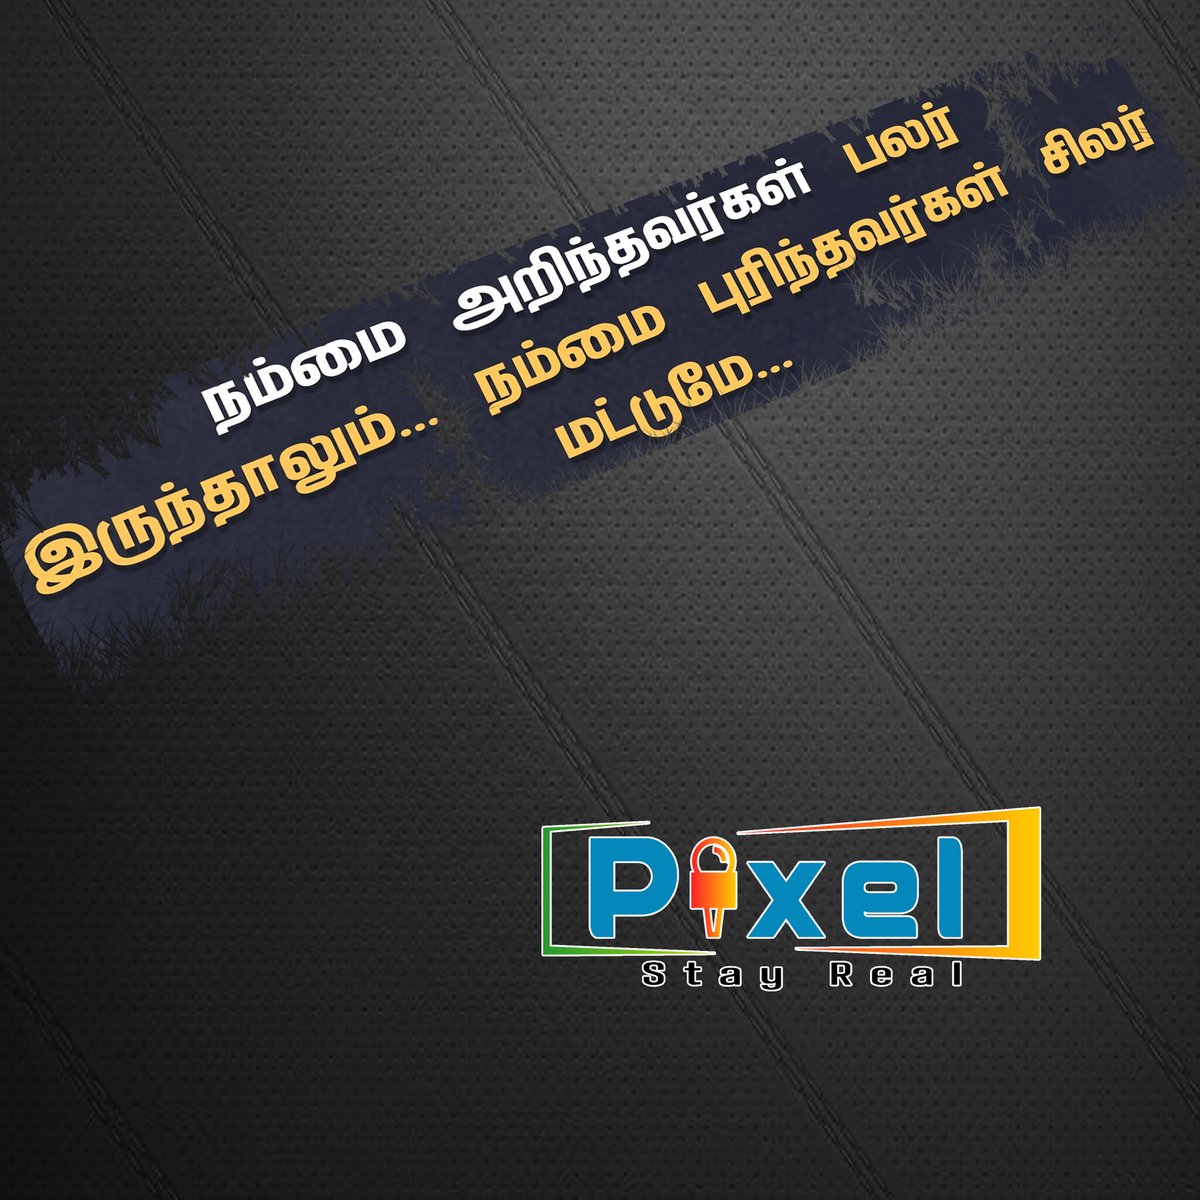 #Tamil #Motivation #pixeltv #pixelmedia  #TamilEntertainment #TamilNews #EntertainmentHub #DailyExcitement #CulturalVibes #FollowUs